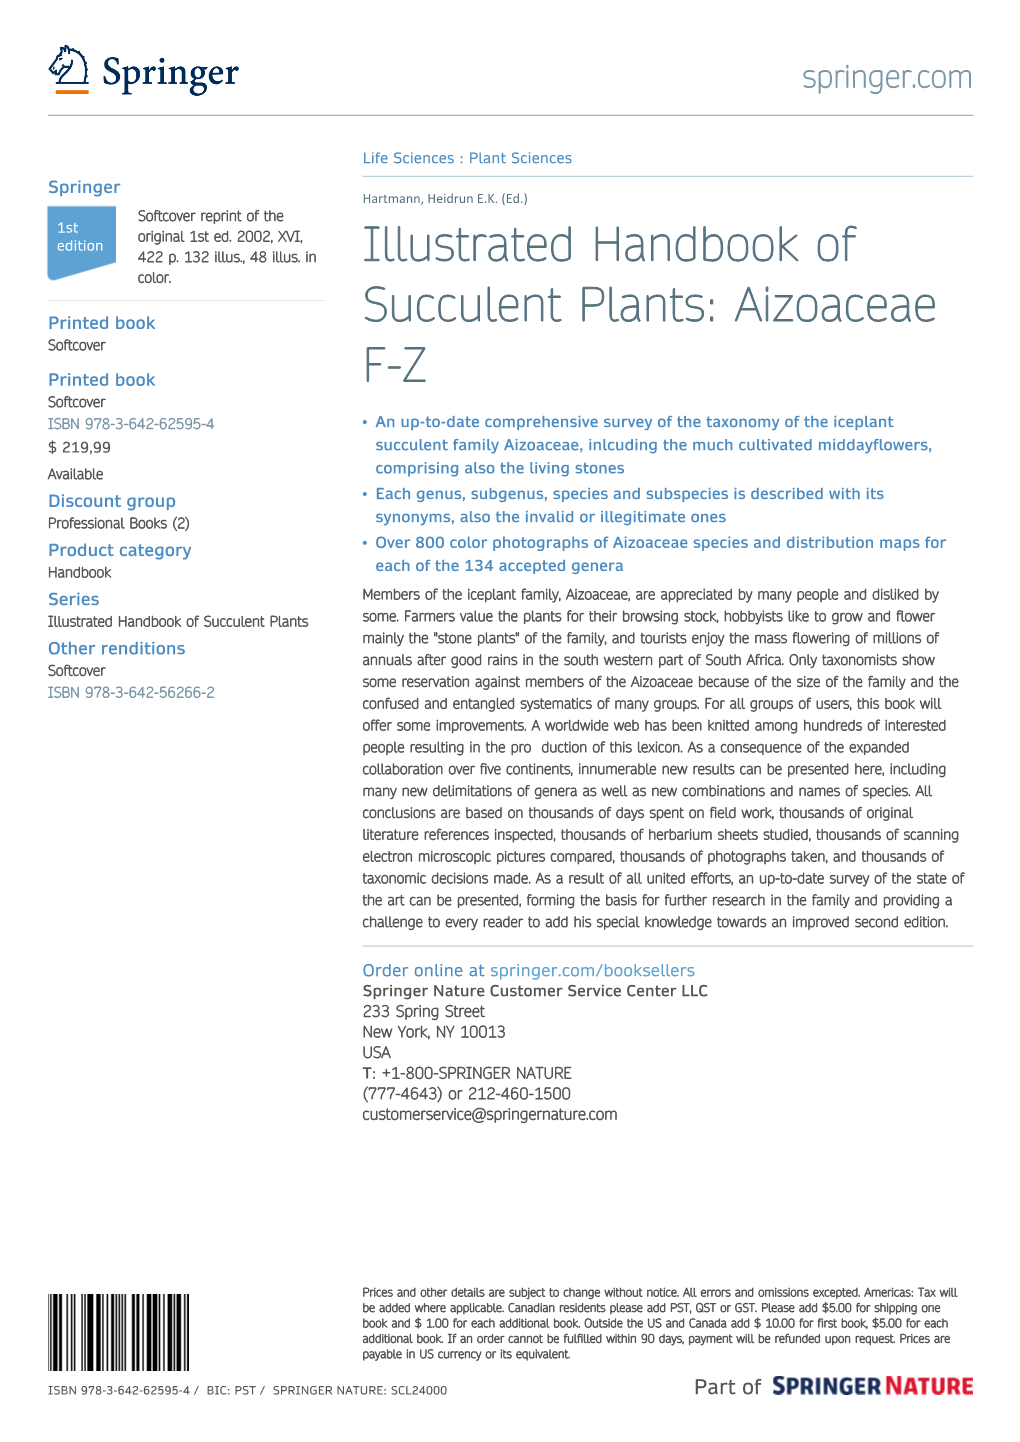 Illustrated Handbook of Succulent Plants: Aizoaceae FZ